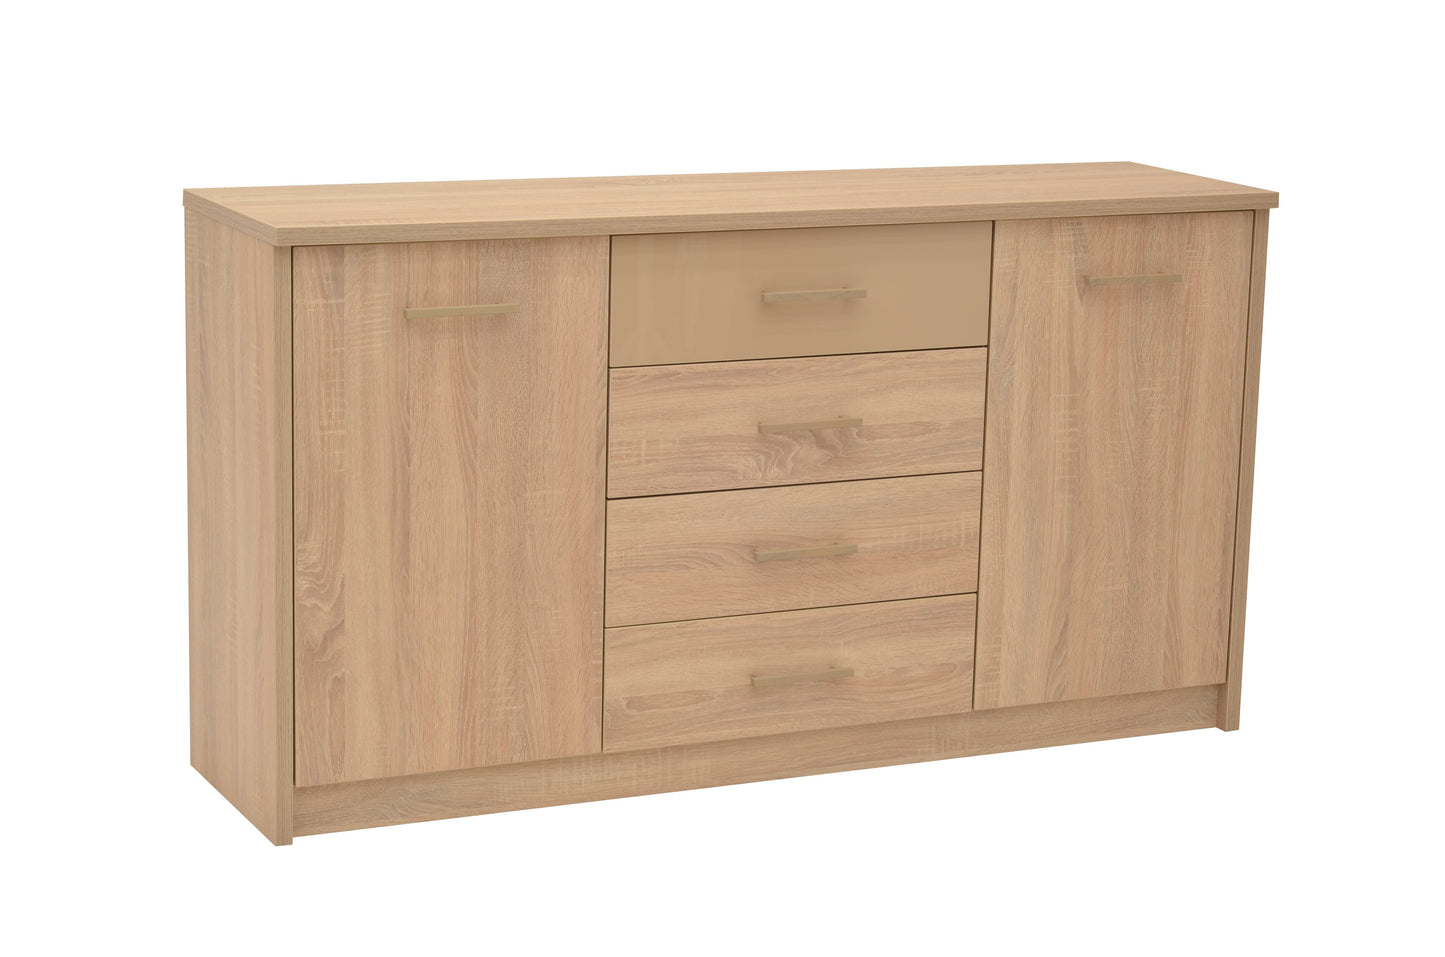 Cremona Sideboard Cabinet 156cm